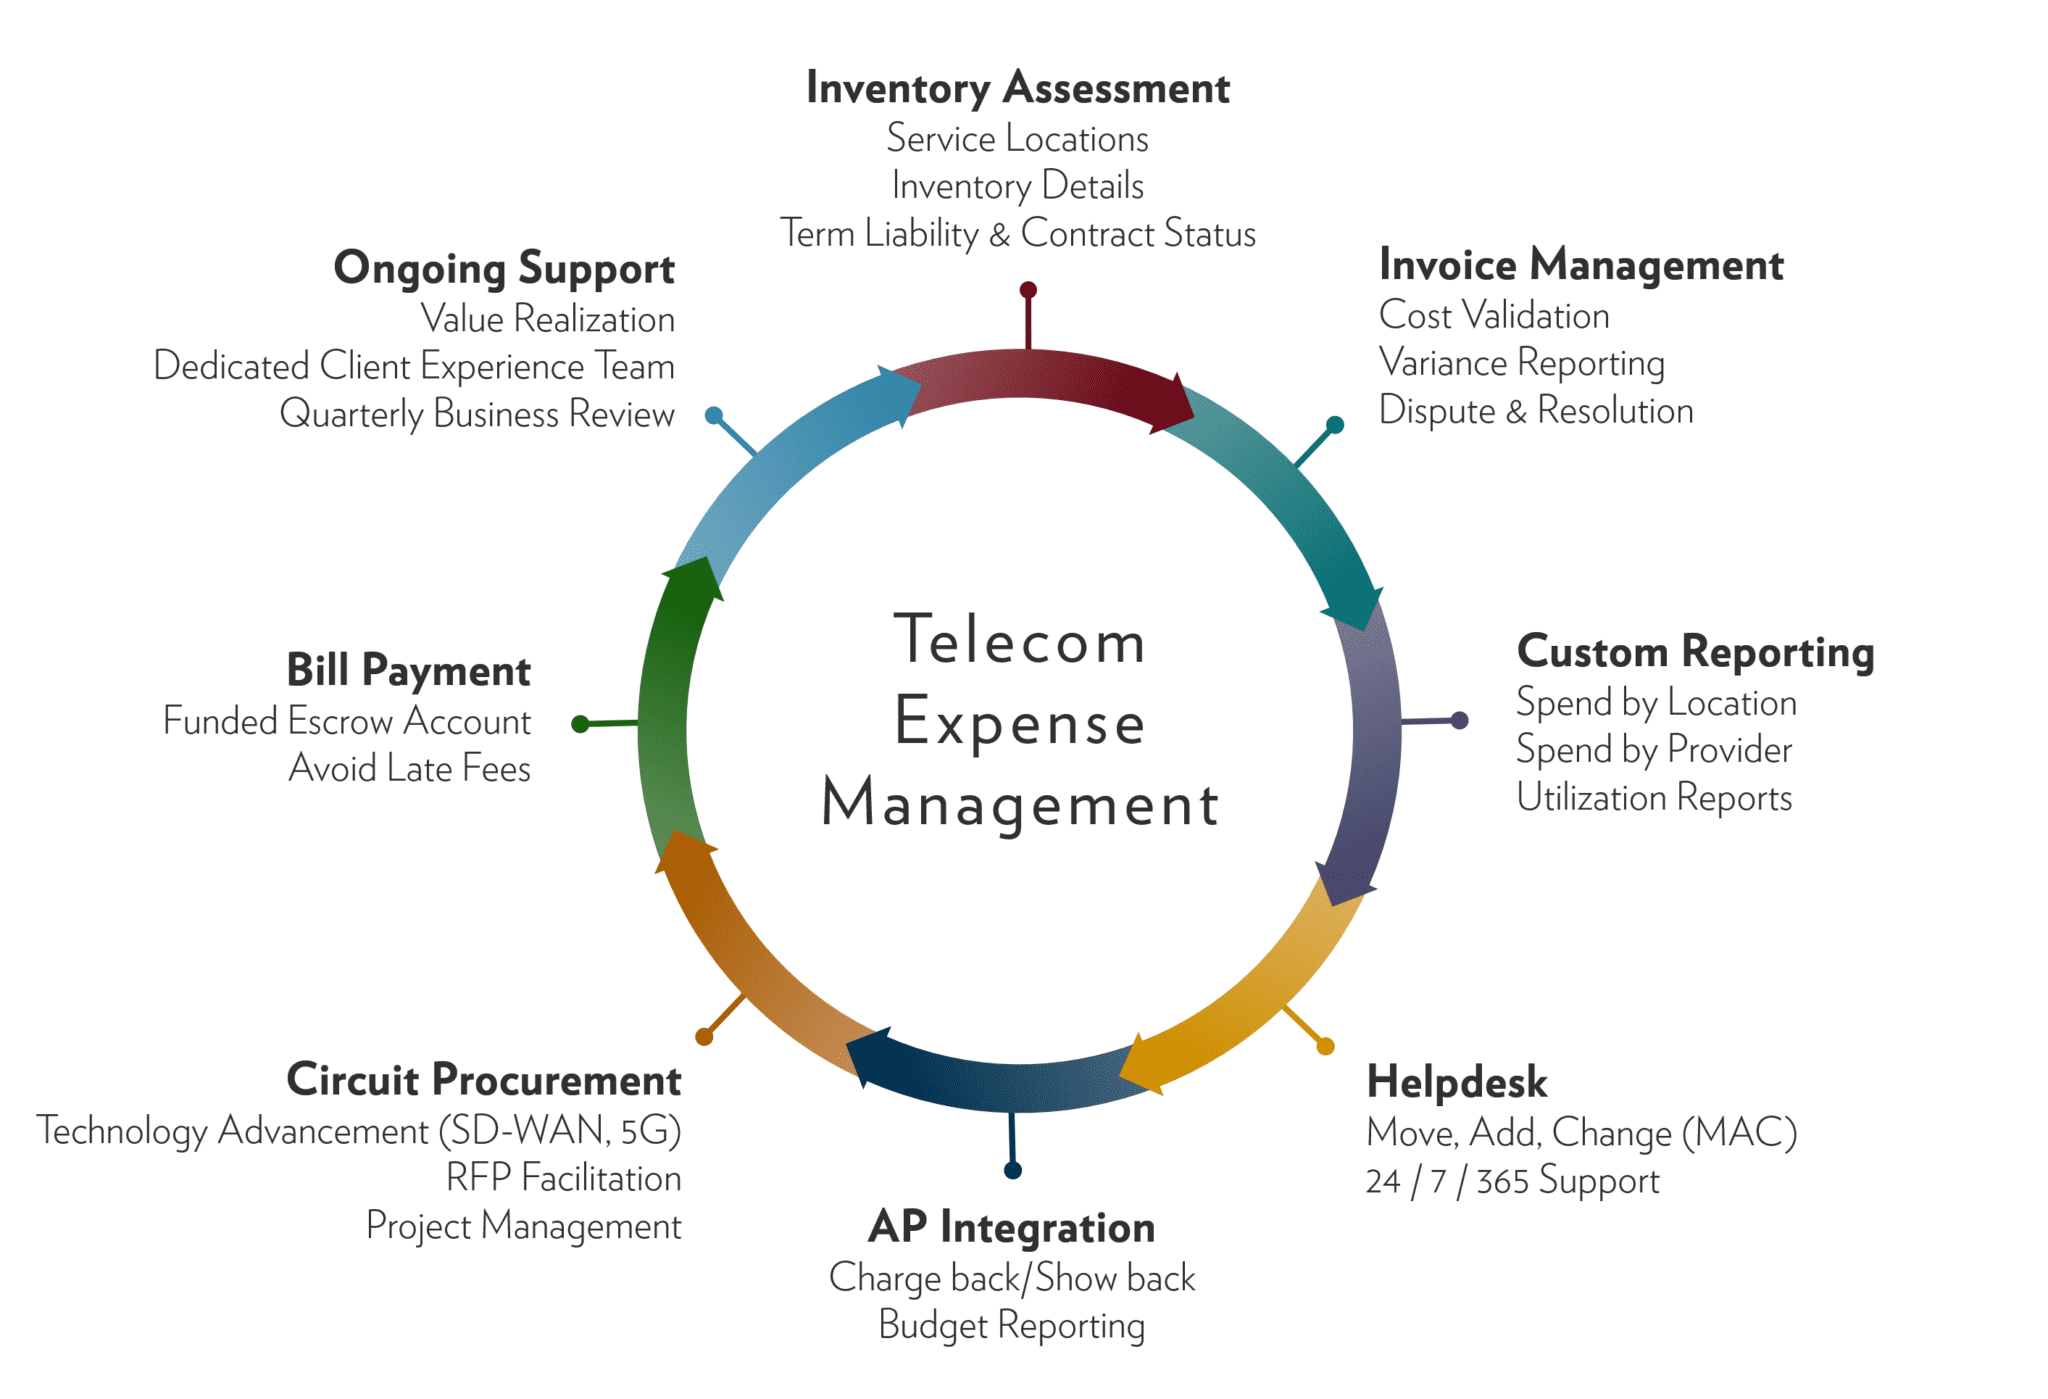 Telecoms expense management jobs